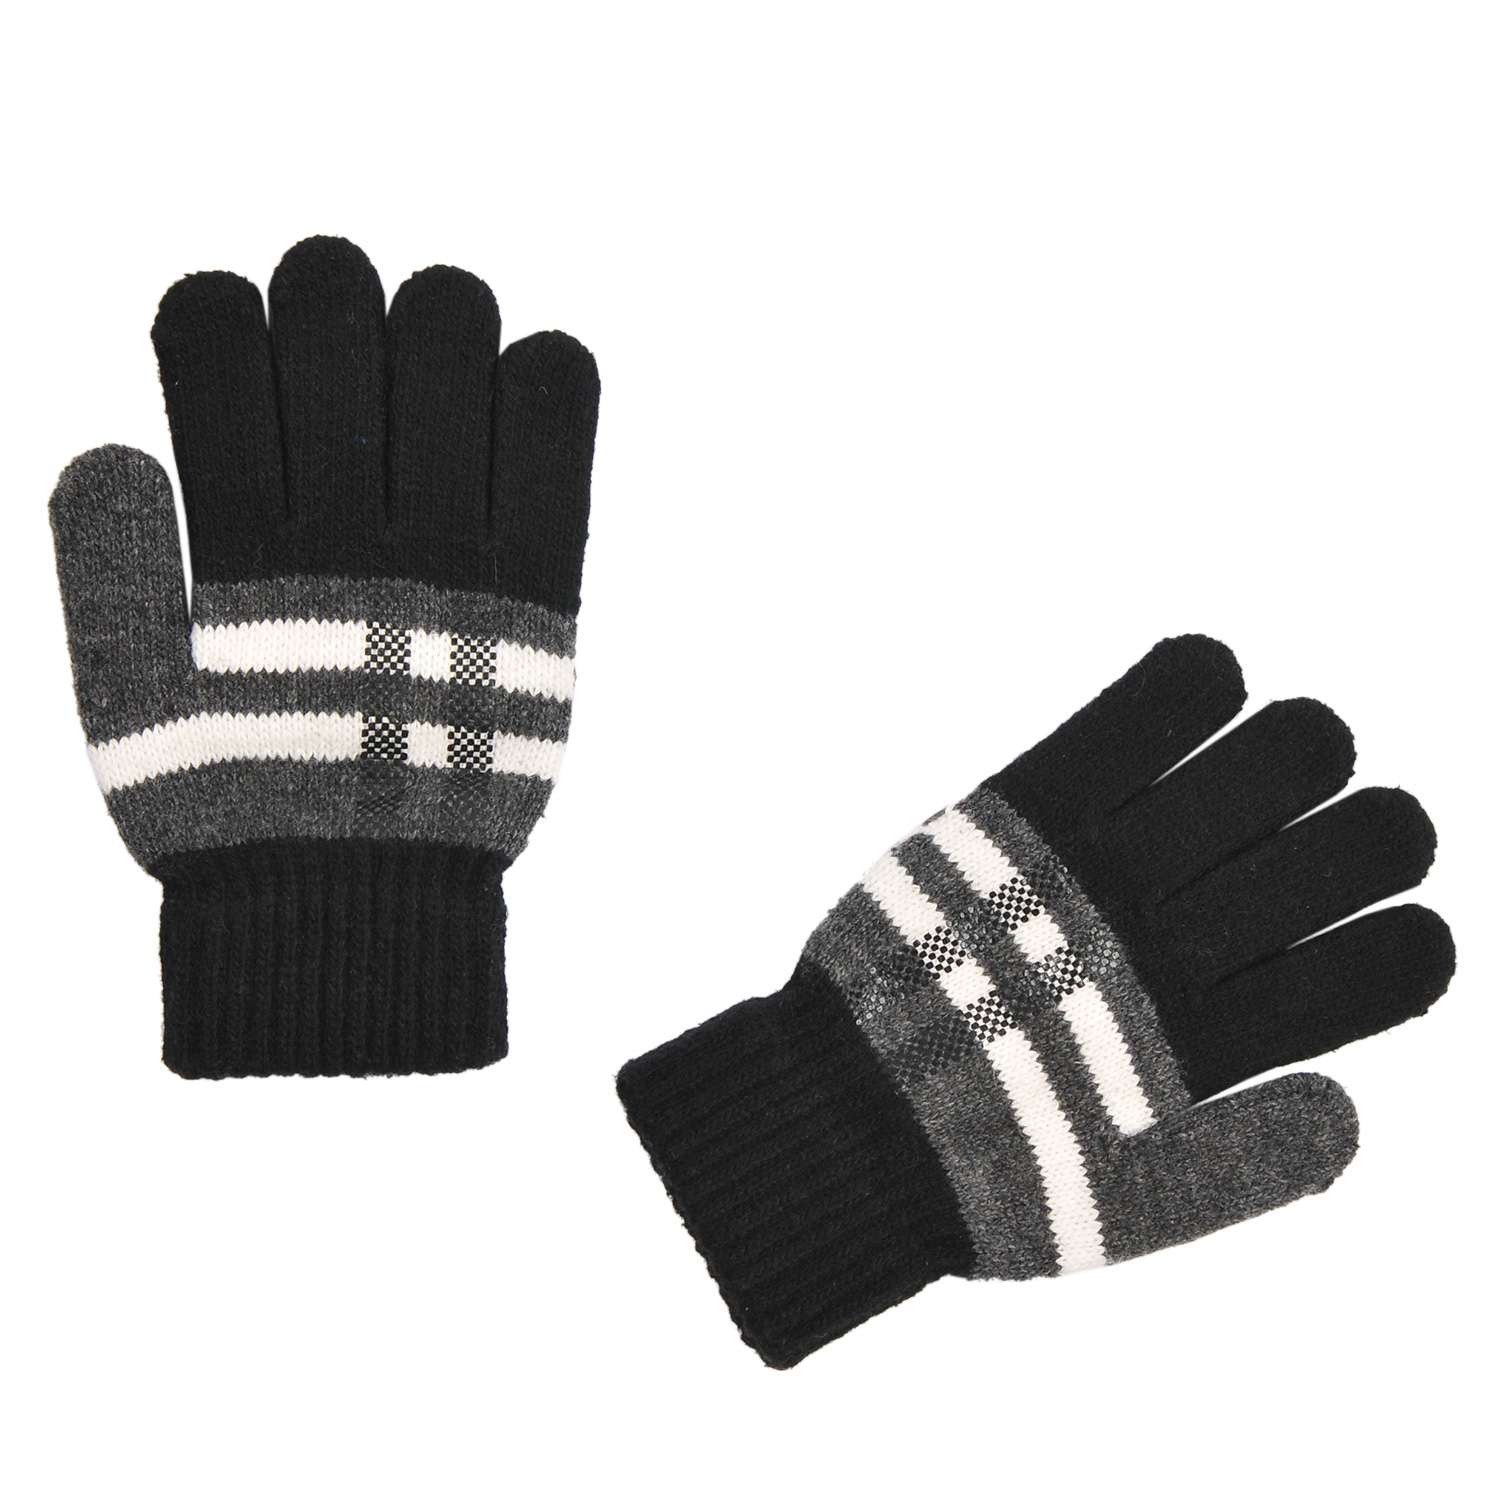 Перчатки S.gloves S 2125-L черный - фото 1